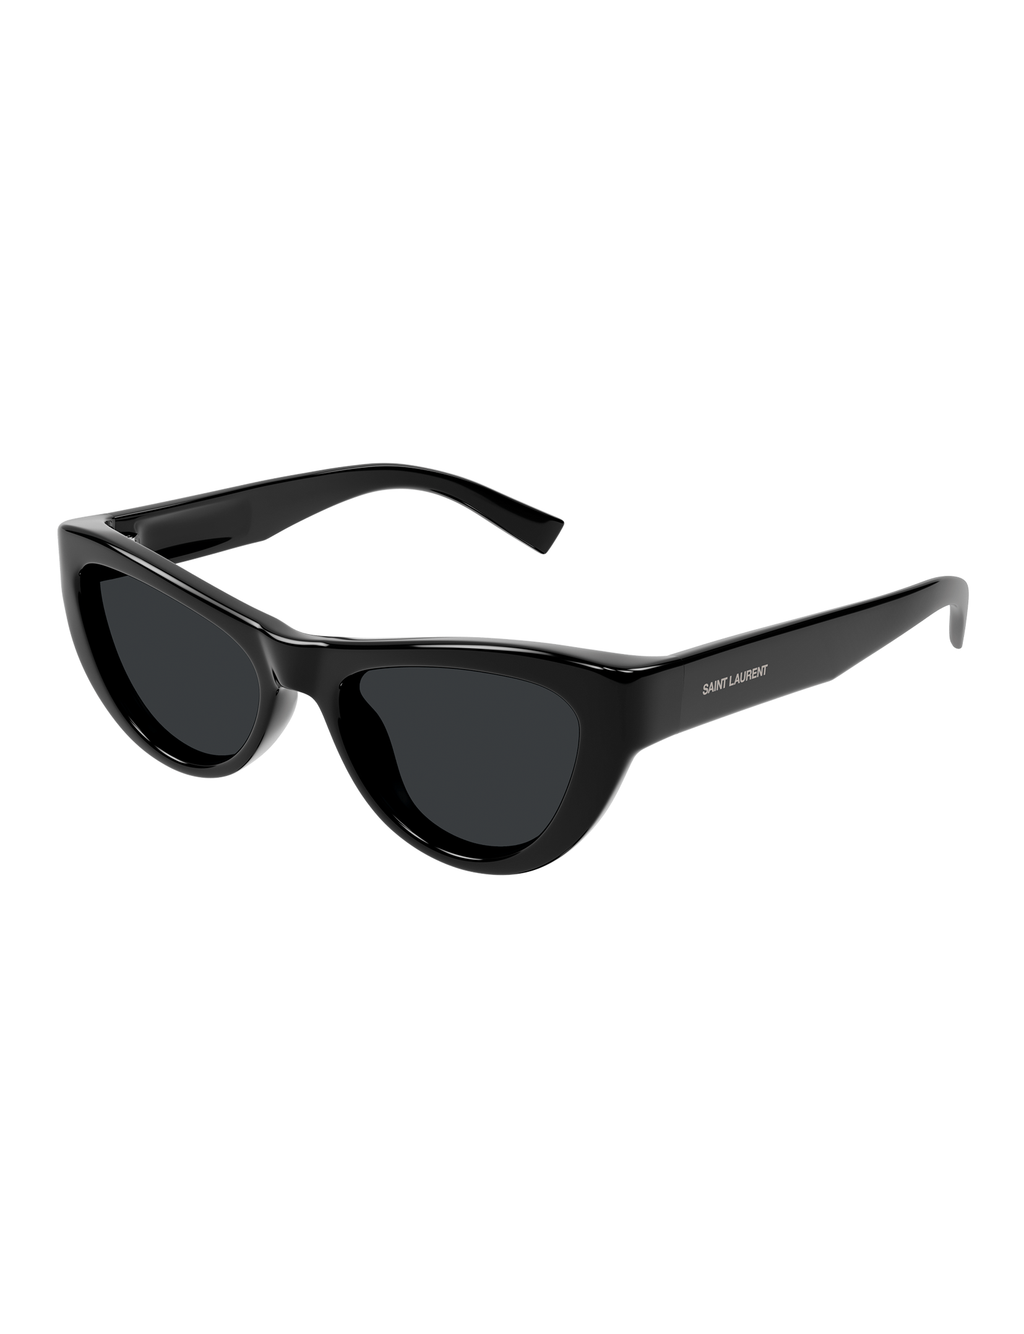 Cat Eye Injection Sunglasses, Black